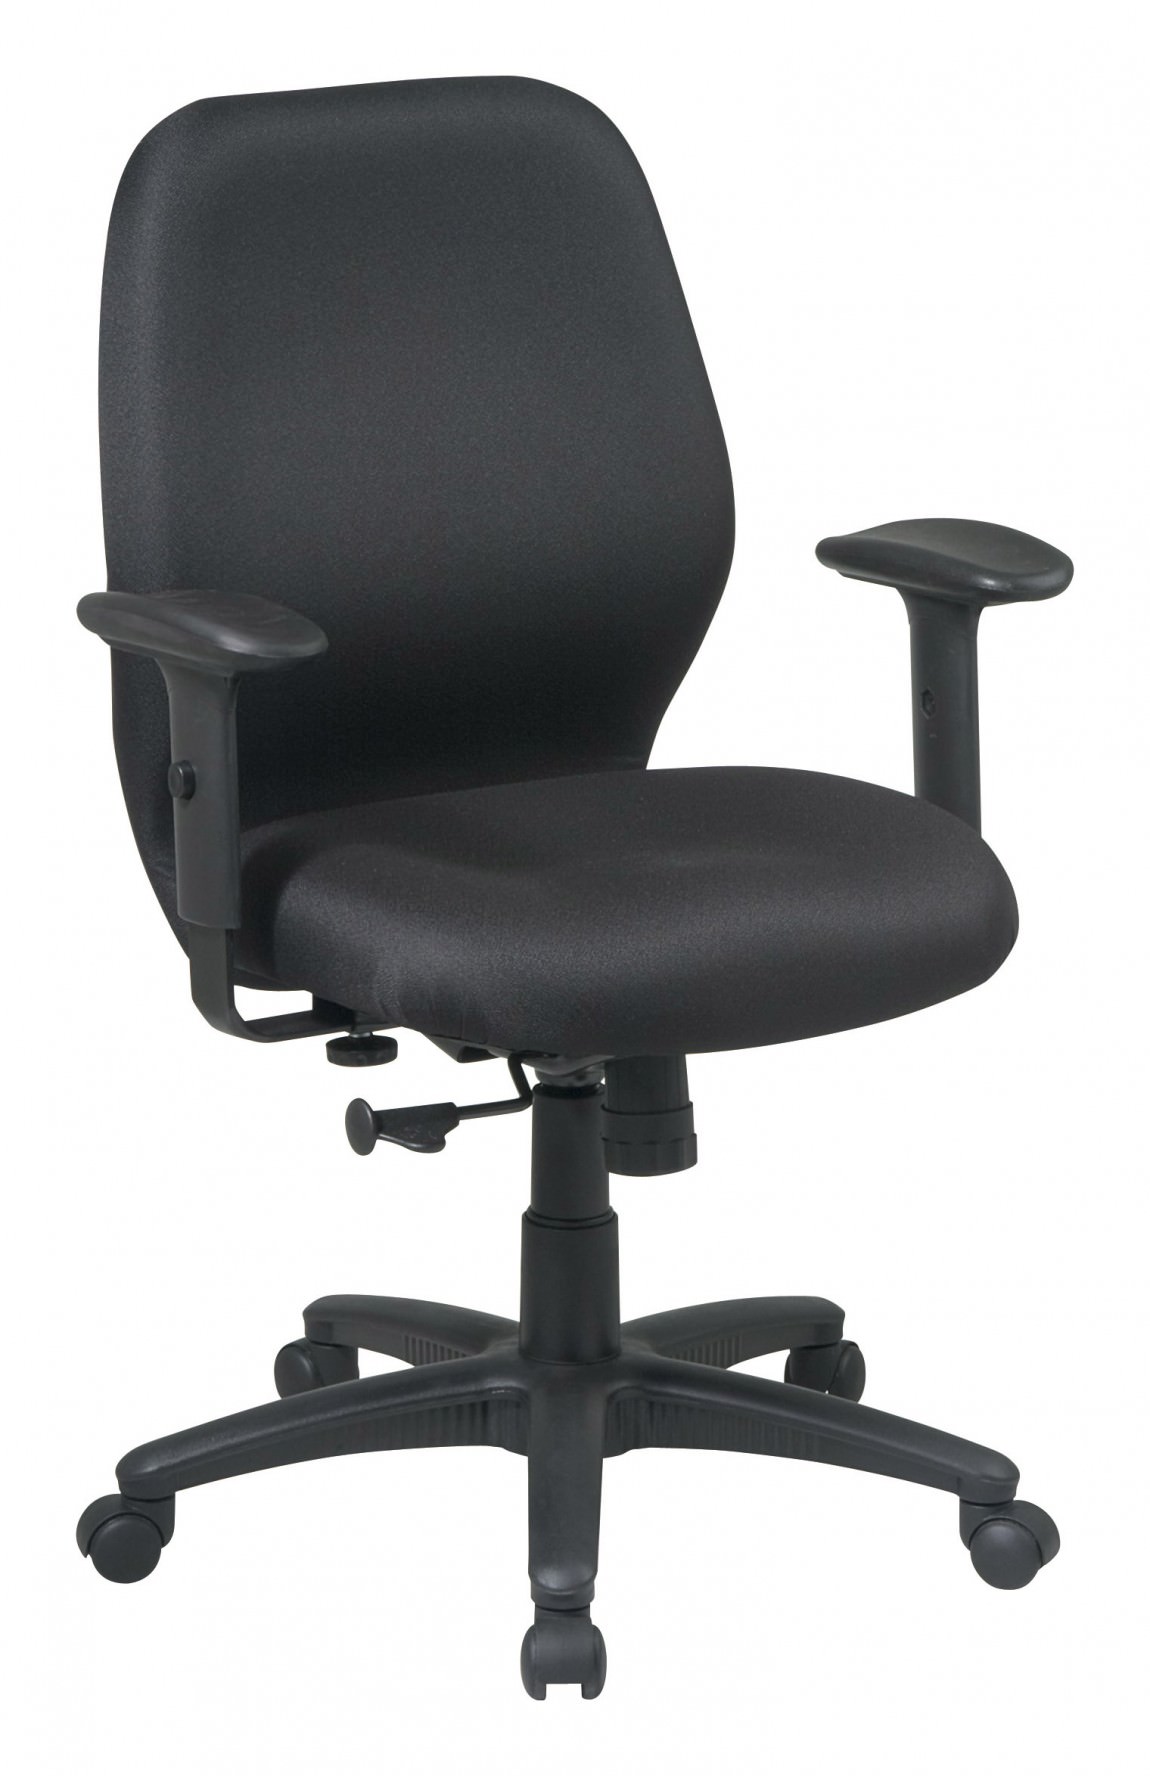 High back mesh office chair SWANSEA, black